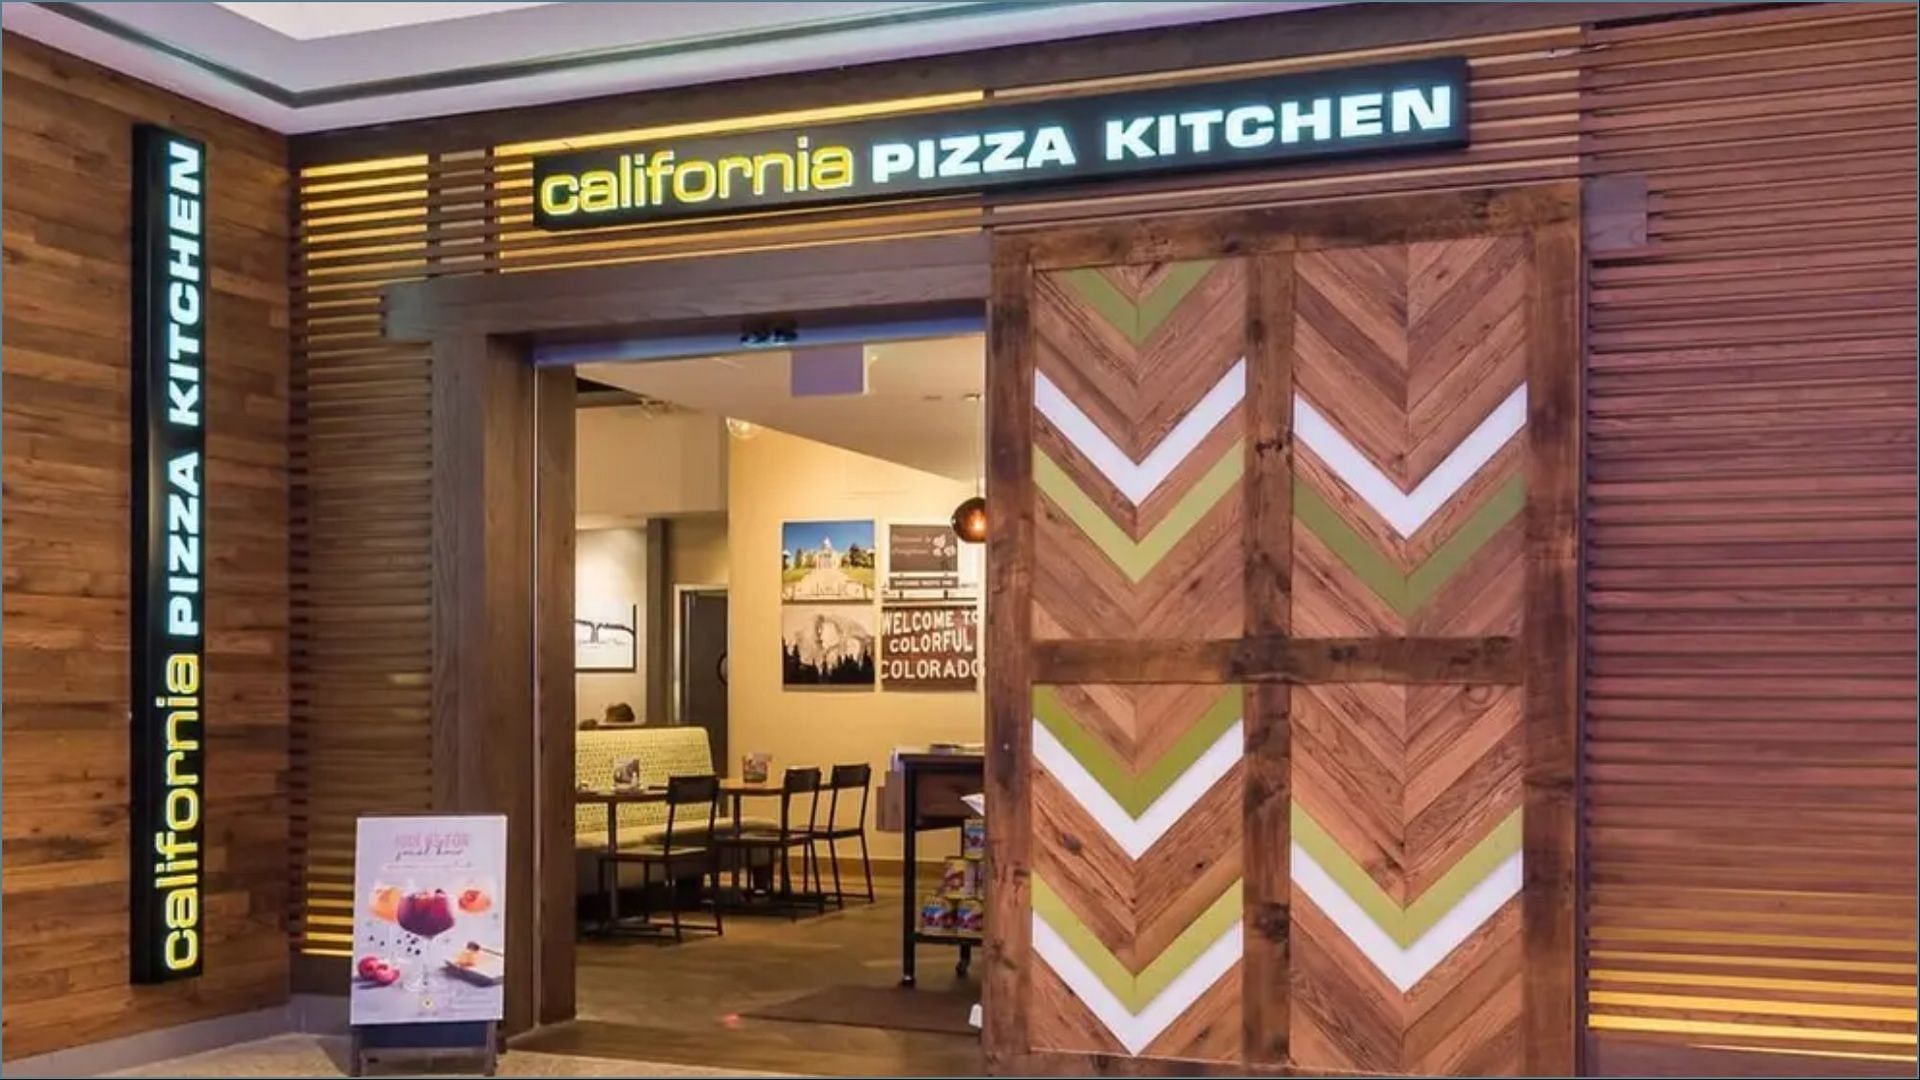 The new seasonal menu hits stores starting January 30 (Image via California Pizza Kitchen)